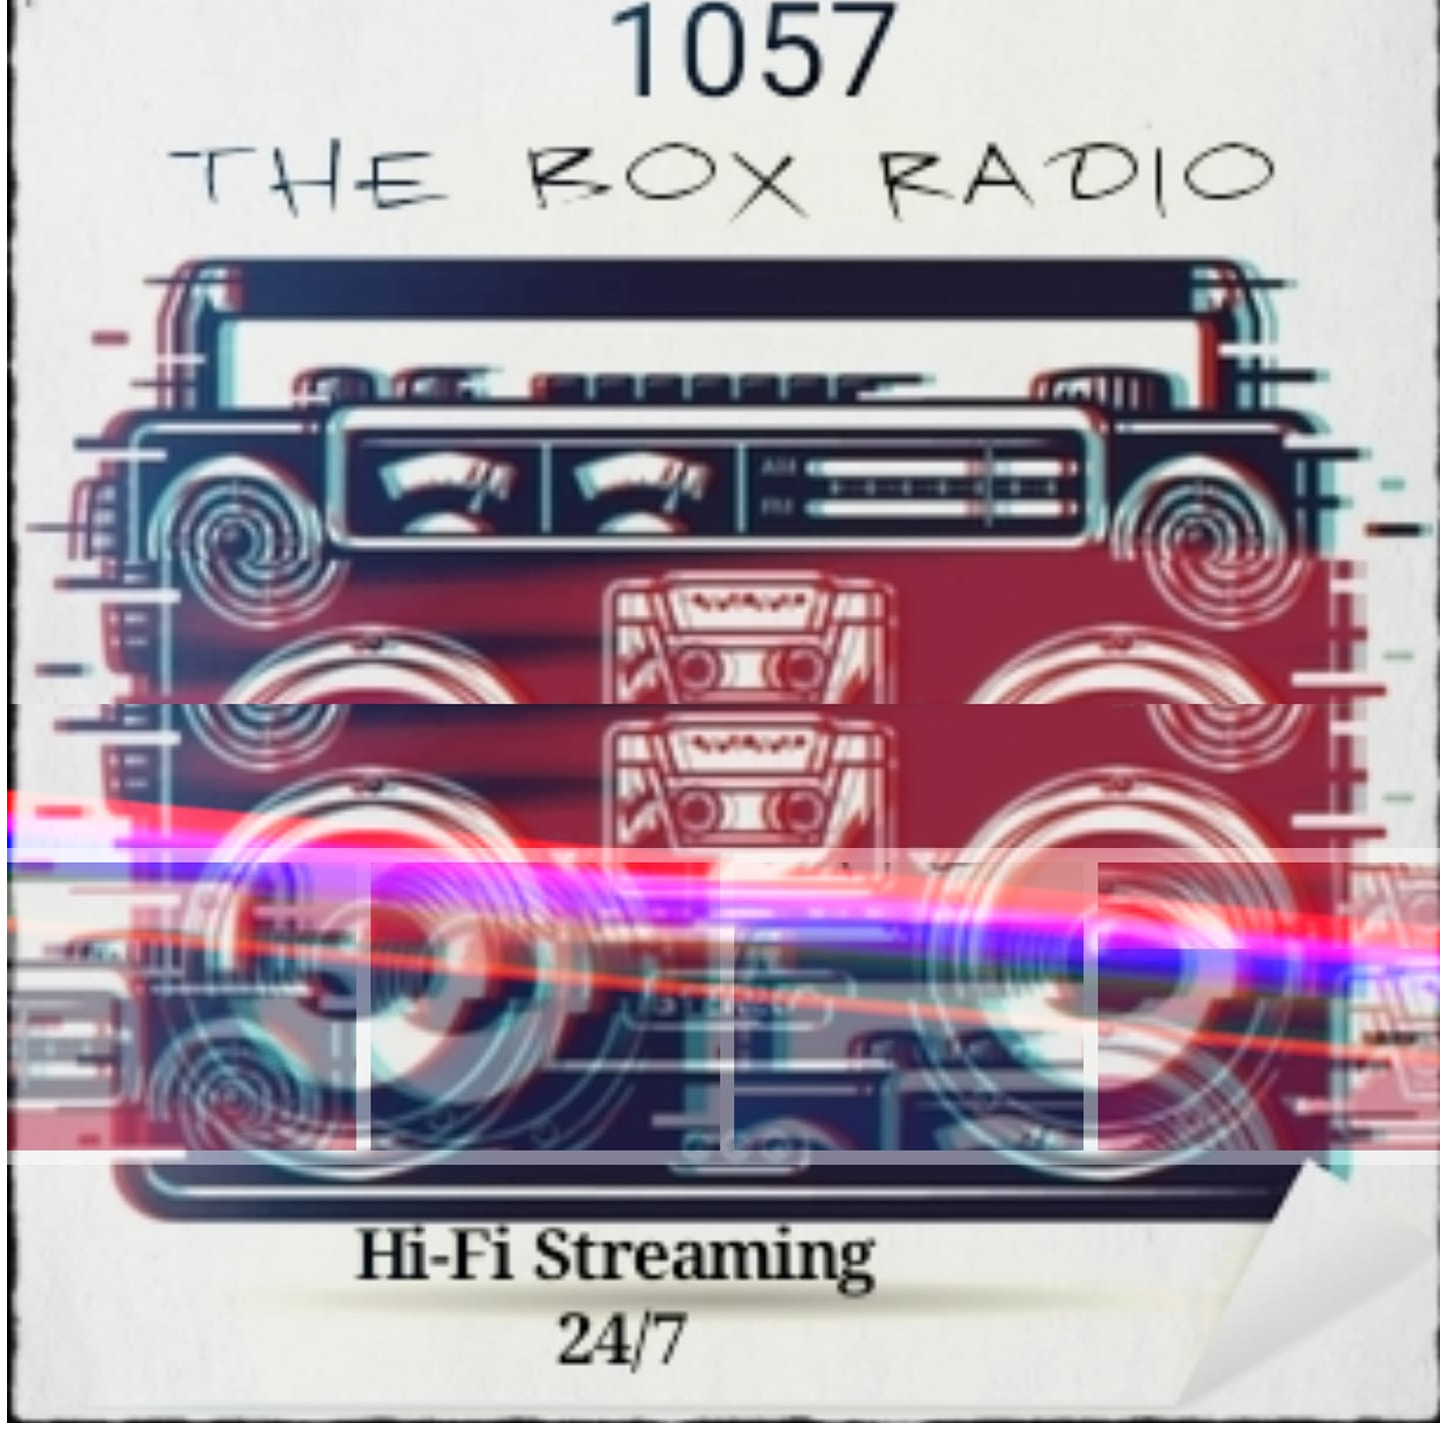 1057 The Box Radio